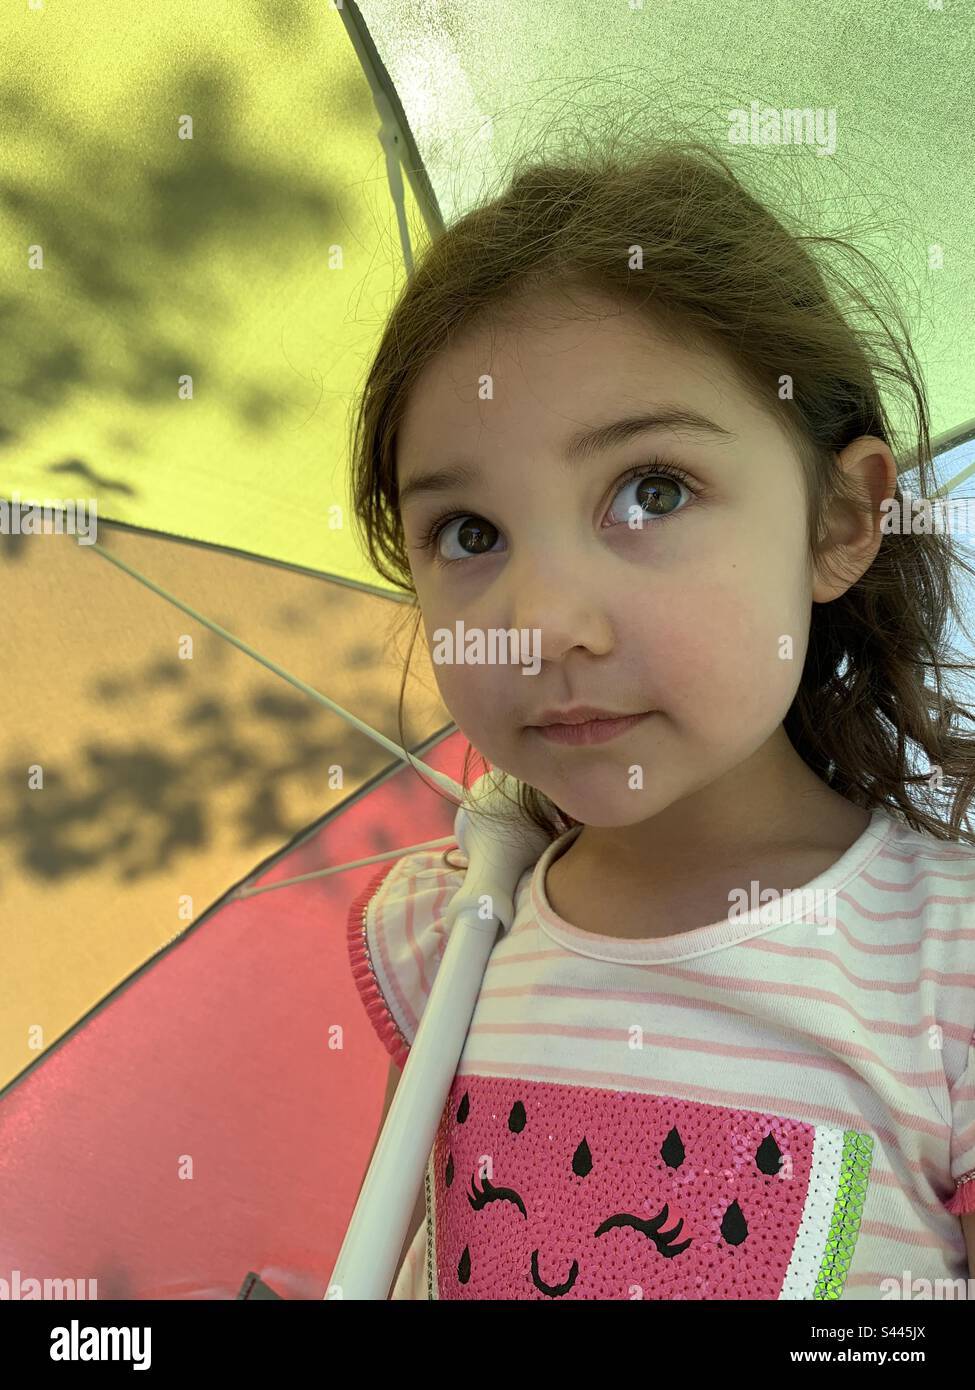 Toddler girl under rainbow umbrella in summer sun with watermelon shirt. Stock Photo